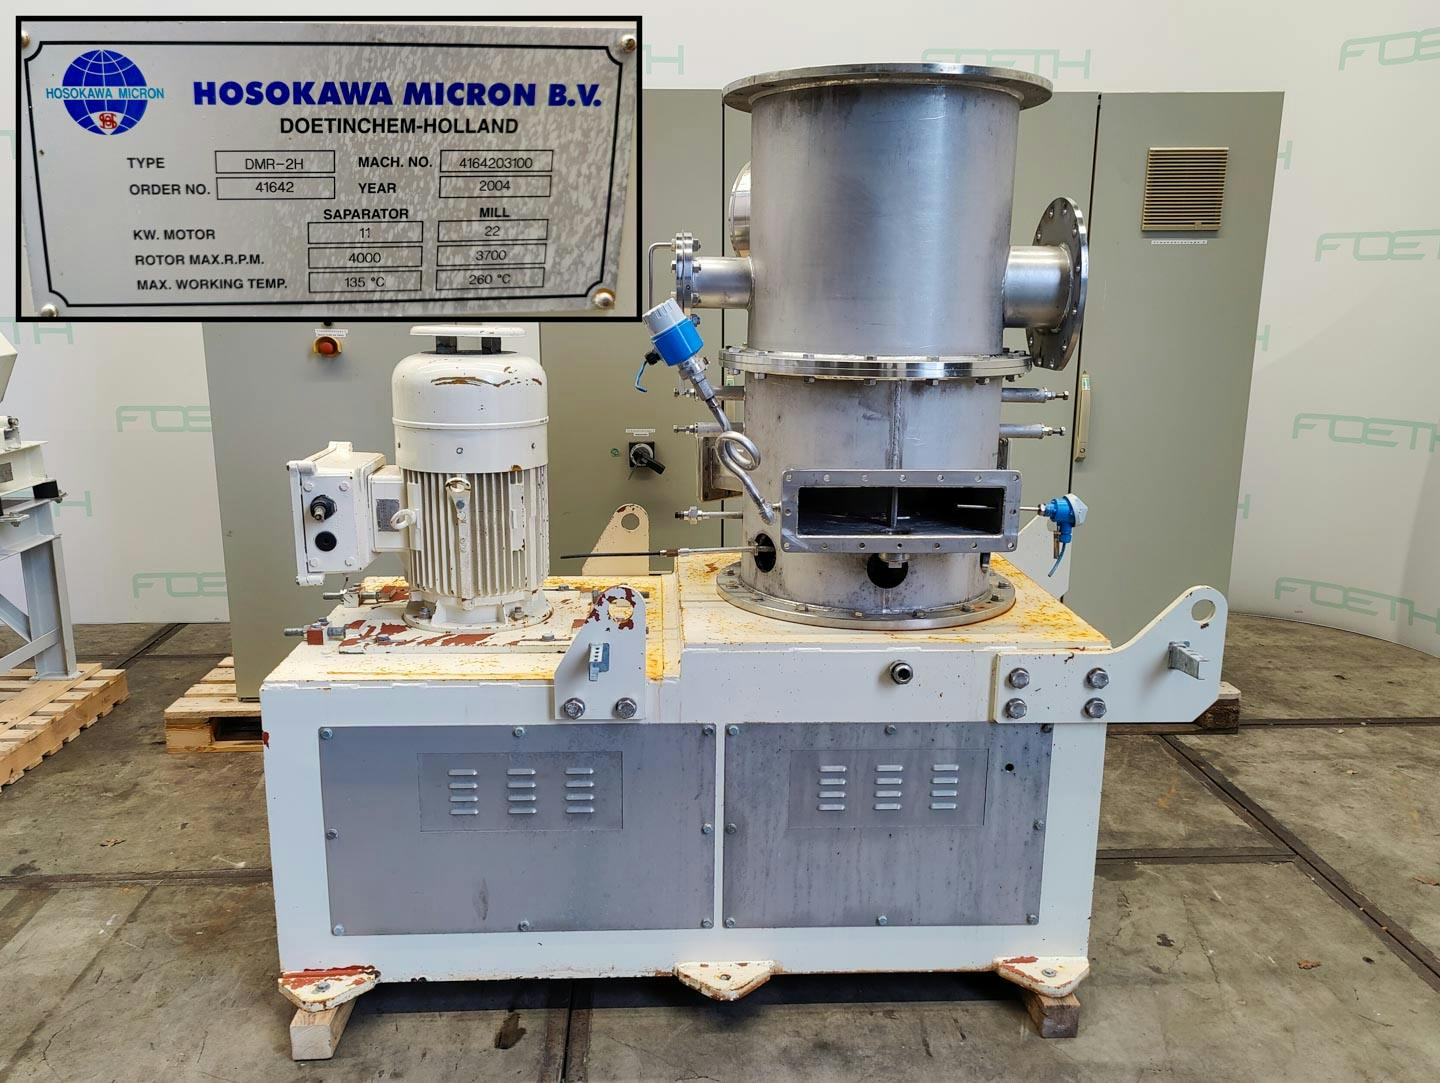 Hosokawa Micron DMR-2H FLASH-DROGER - Drying system - Continuous dryer - image 4